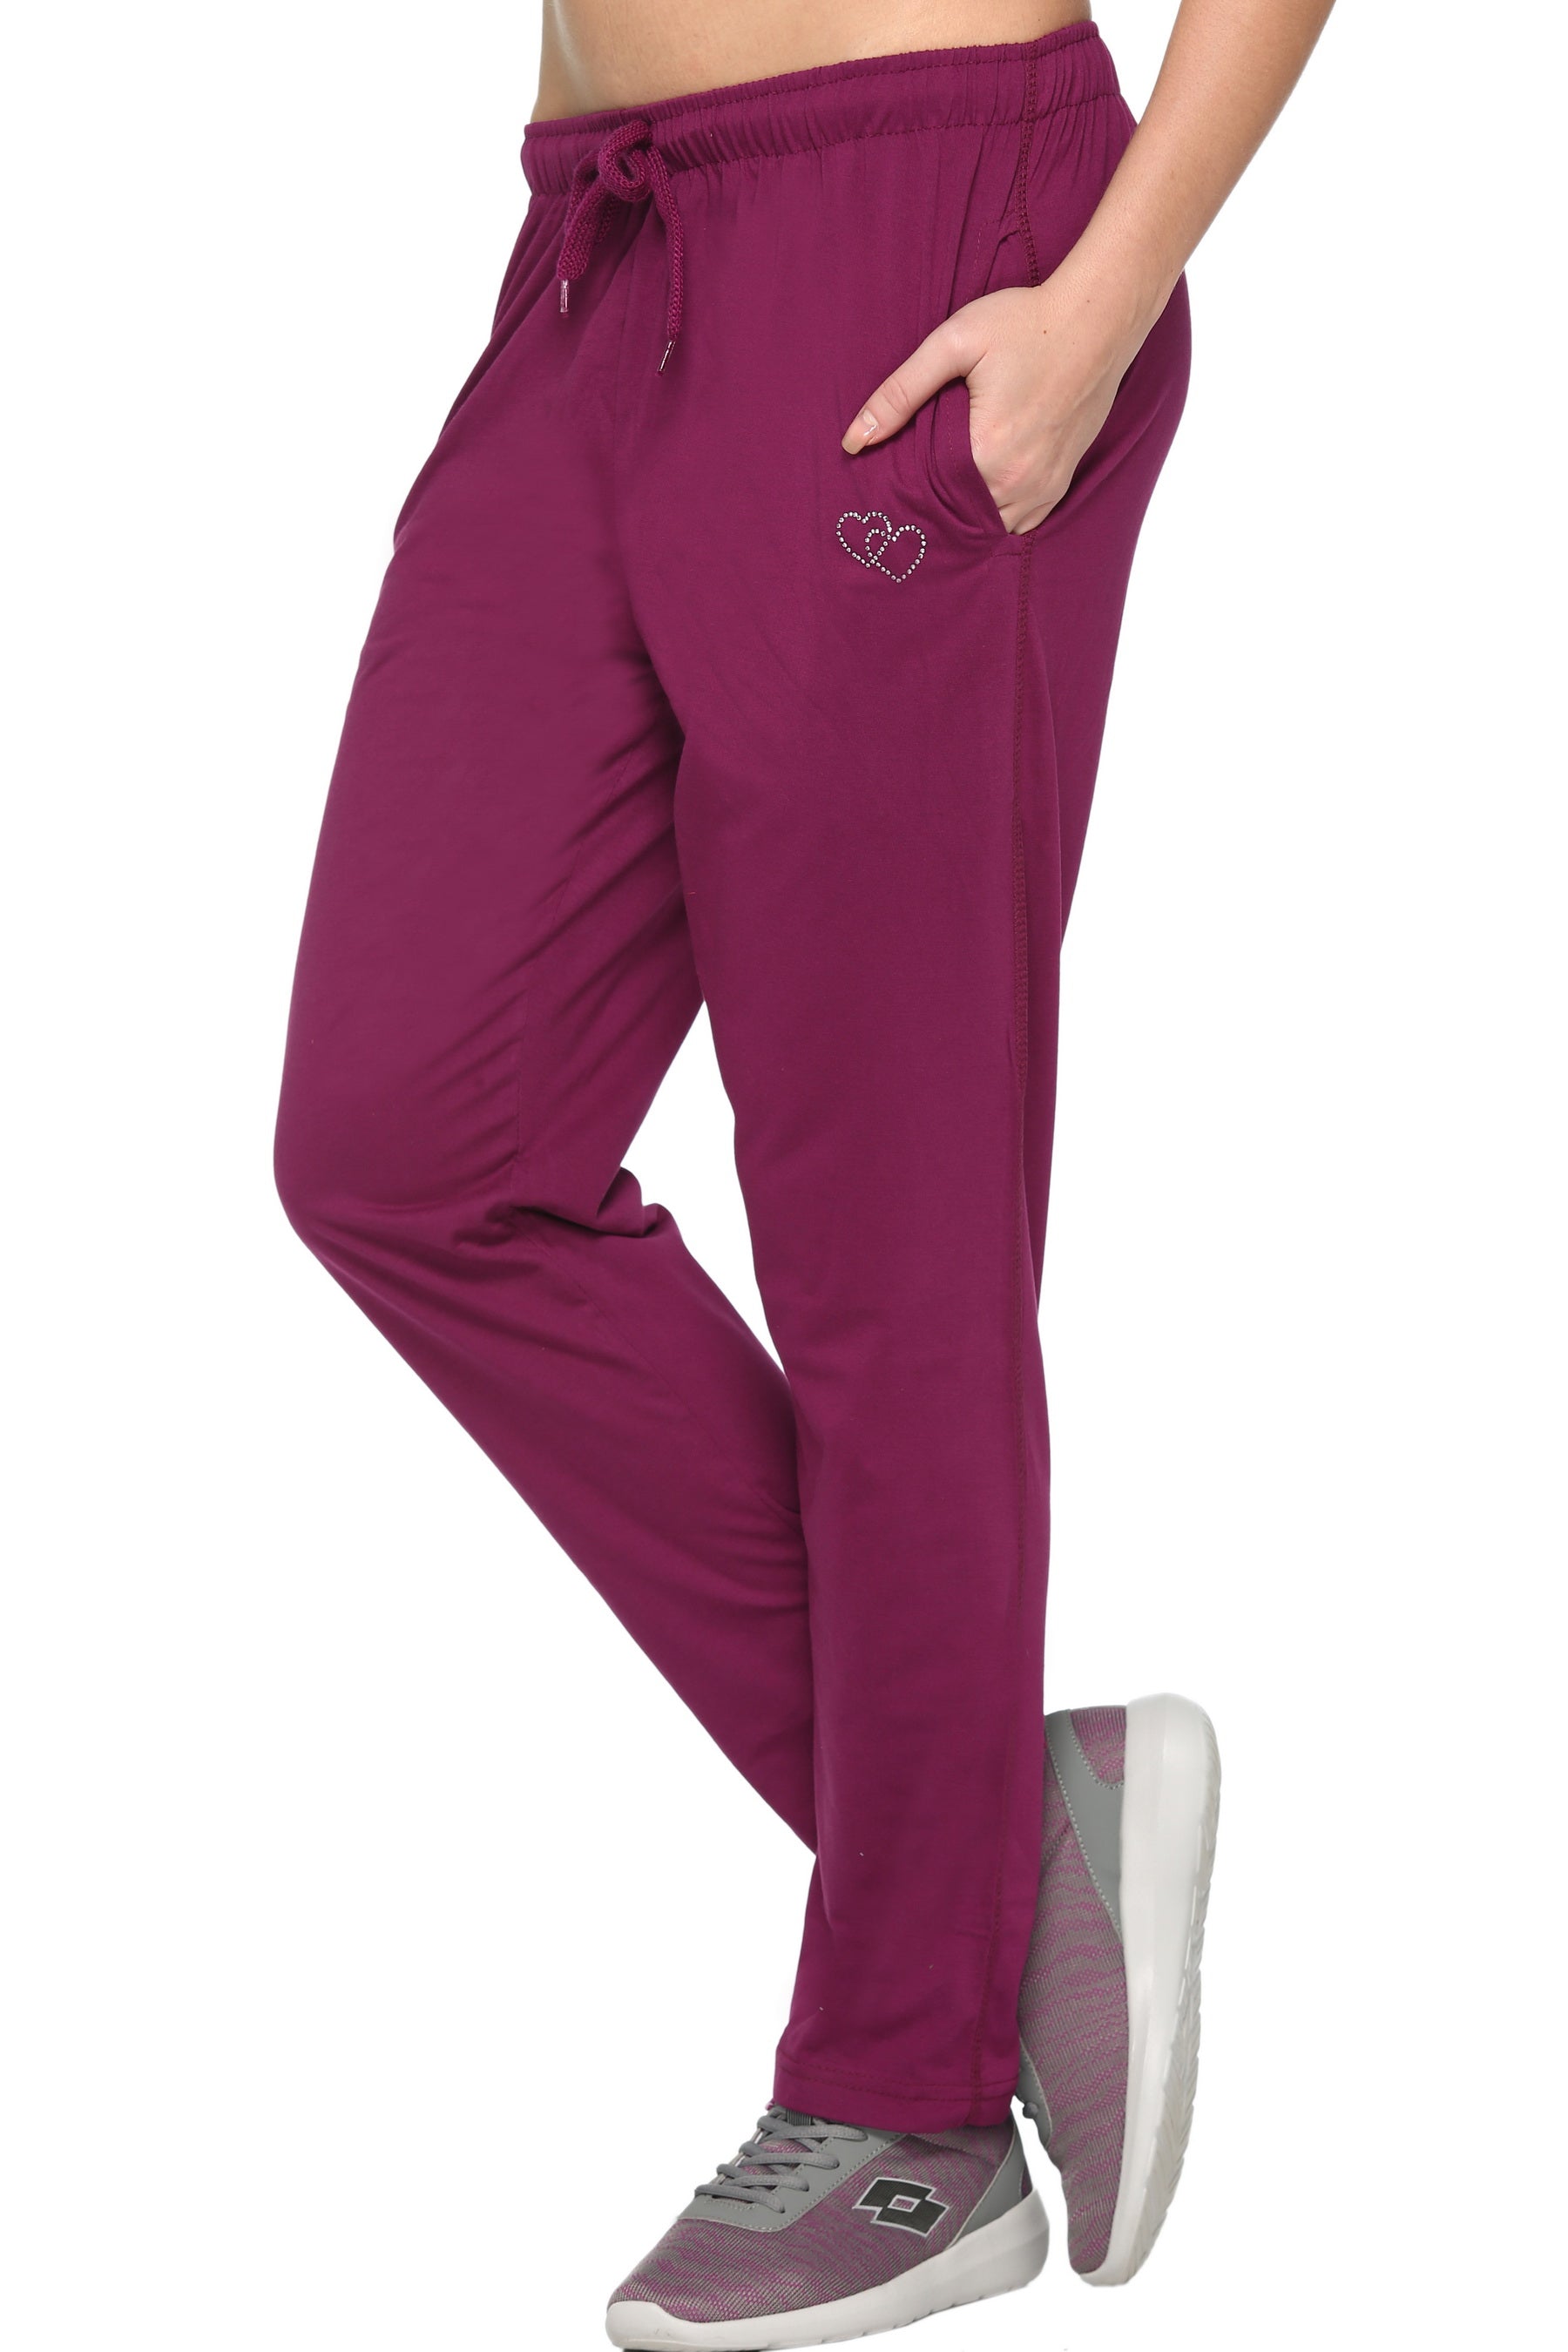 evolove Grey Round neck evolove Print Women's Full sleeve (Pajama set) –  Evolove India